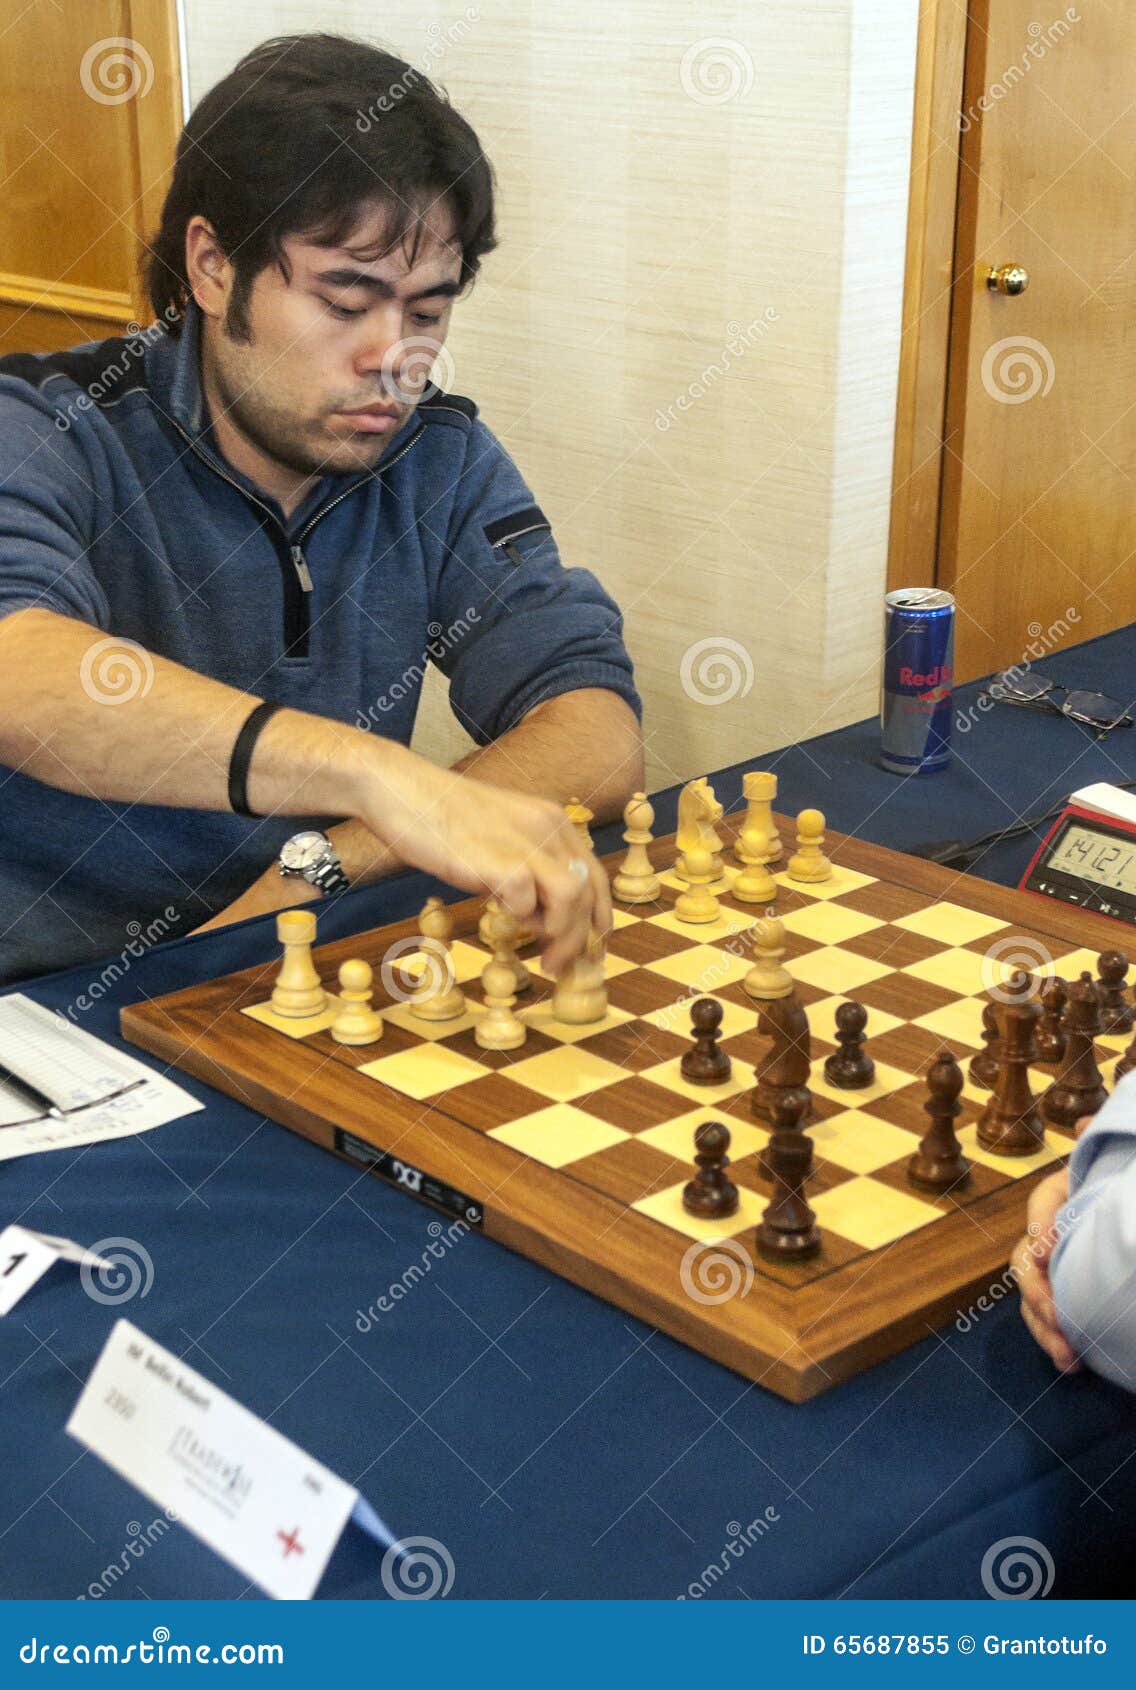 Look up a CXR Chess Player